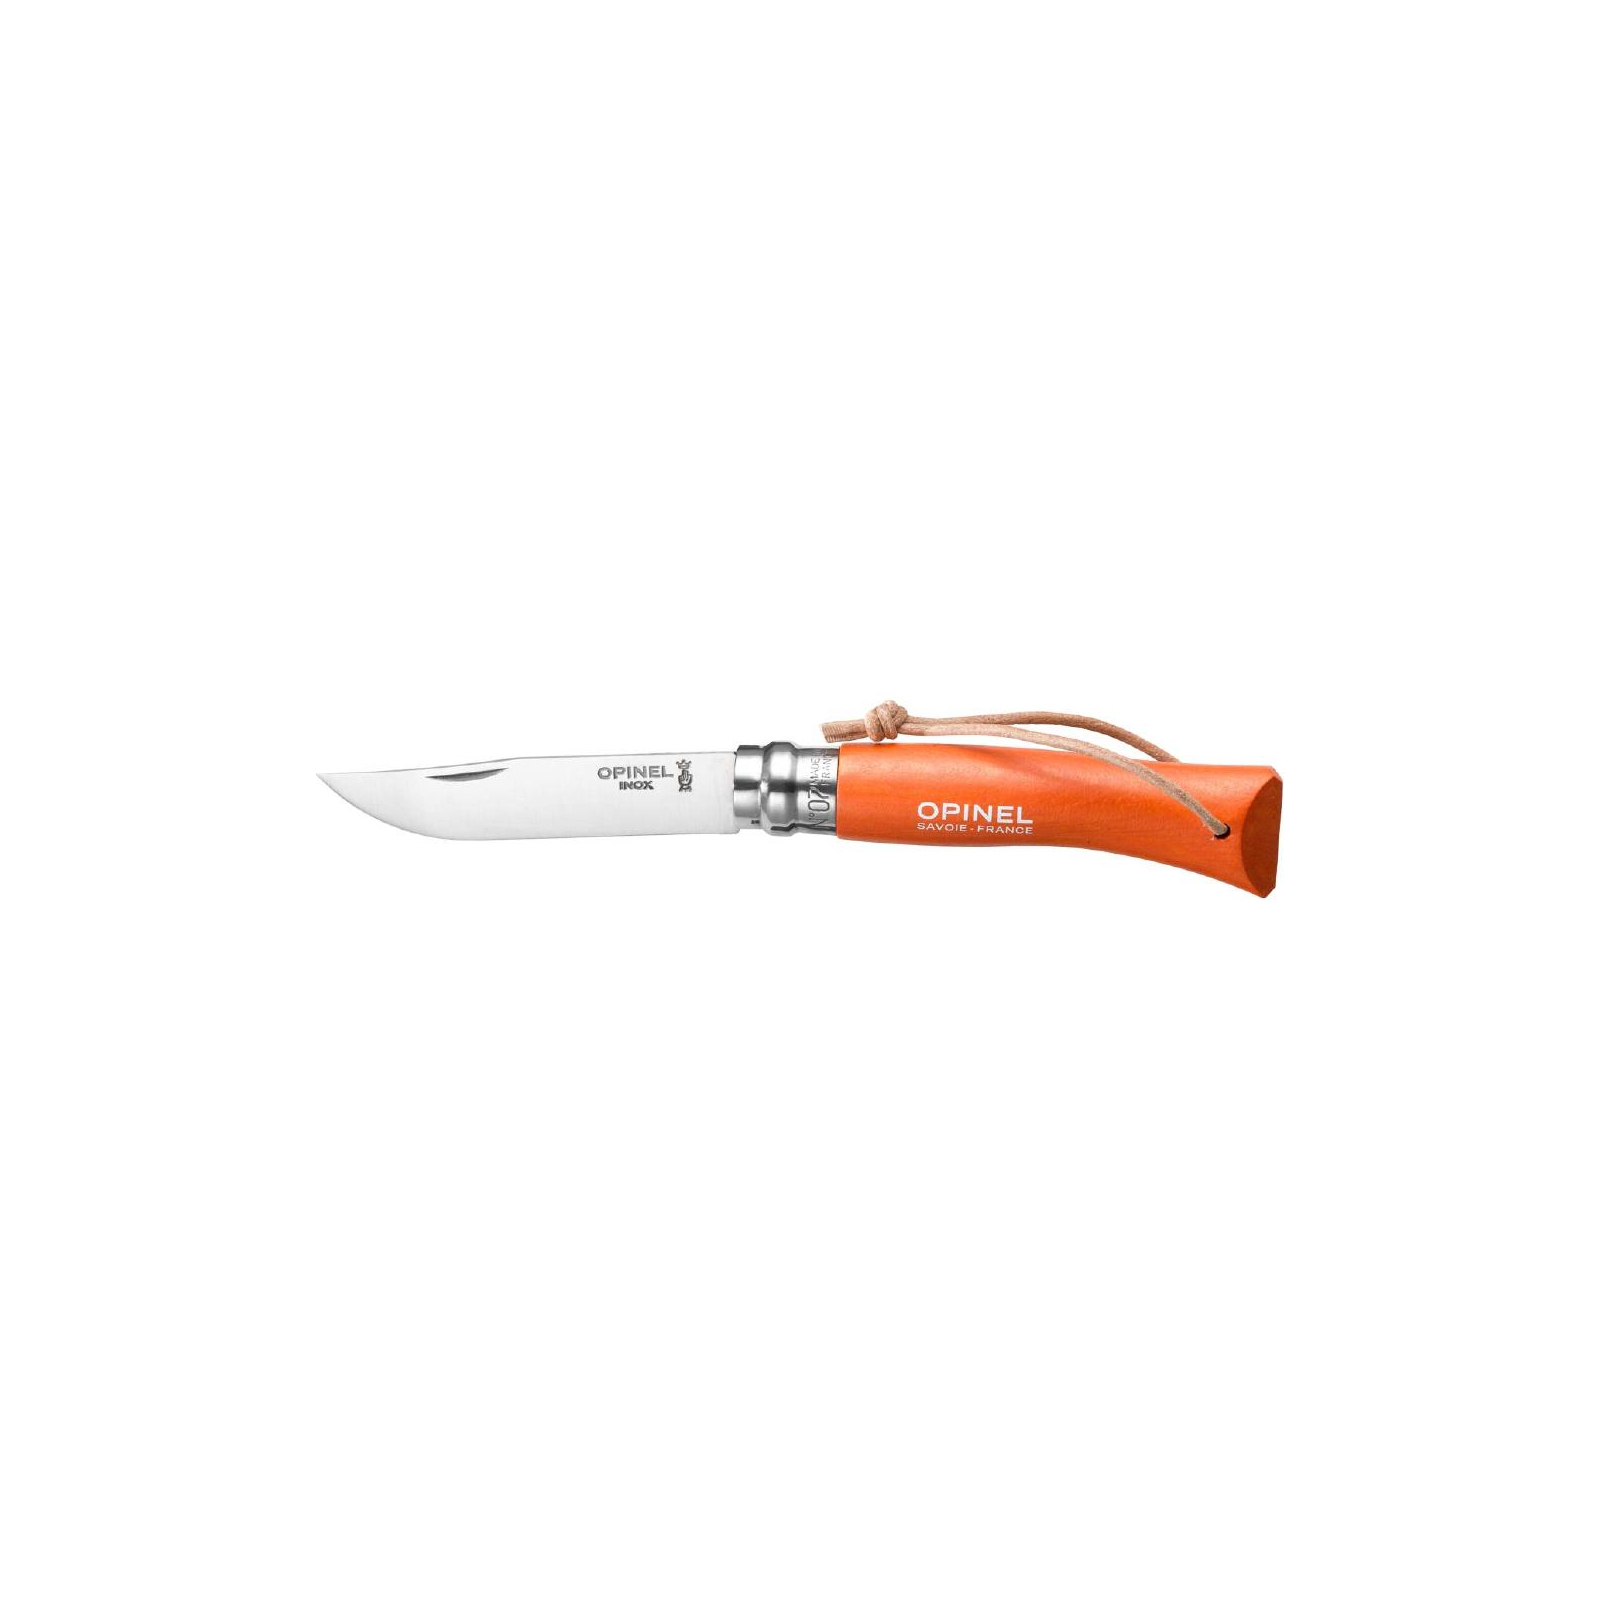 Нож Opinel №7 Inox VRI Trekking оранжевый, без упаковки (002208)